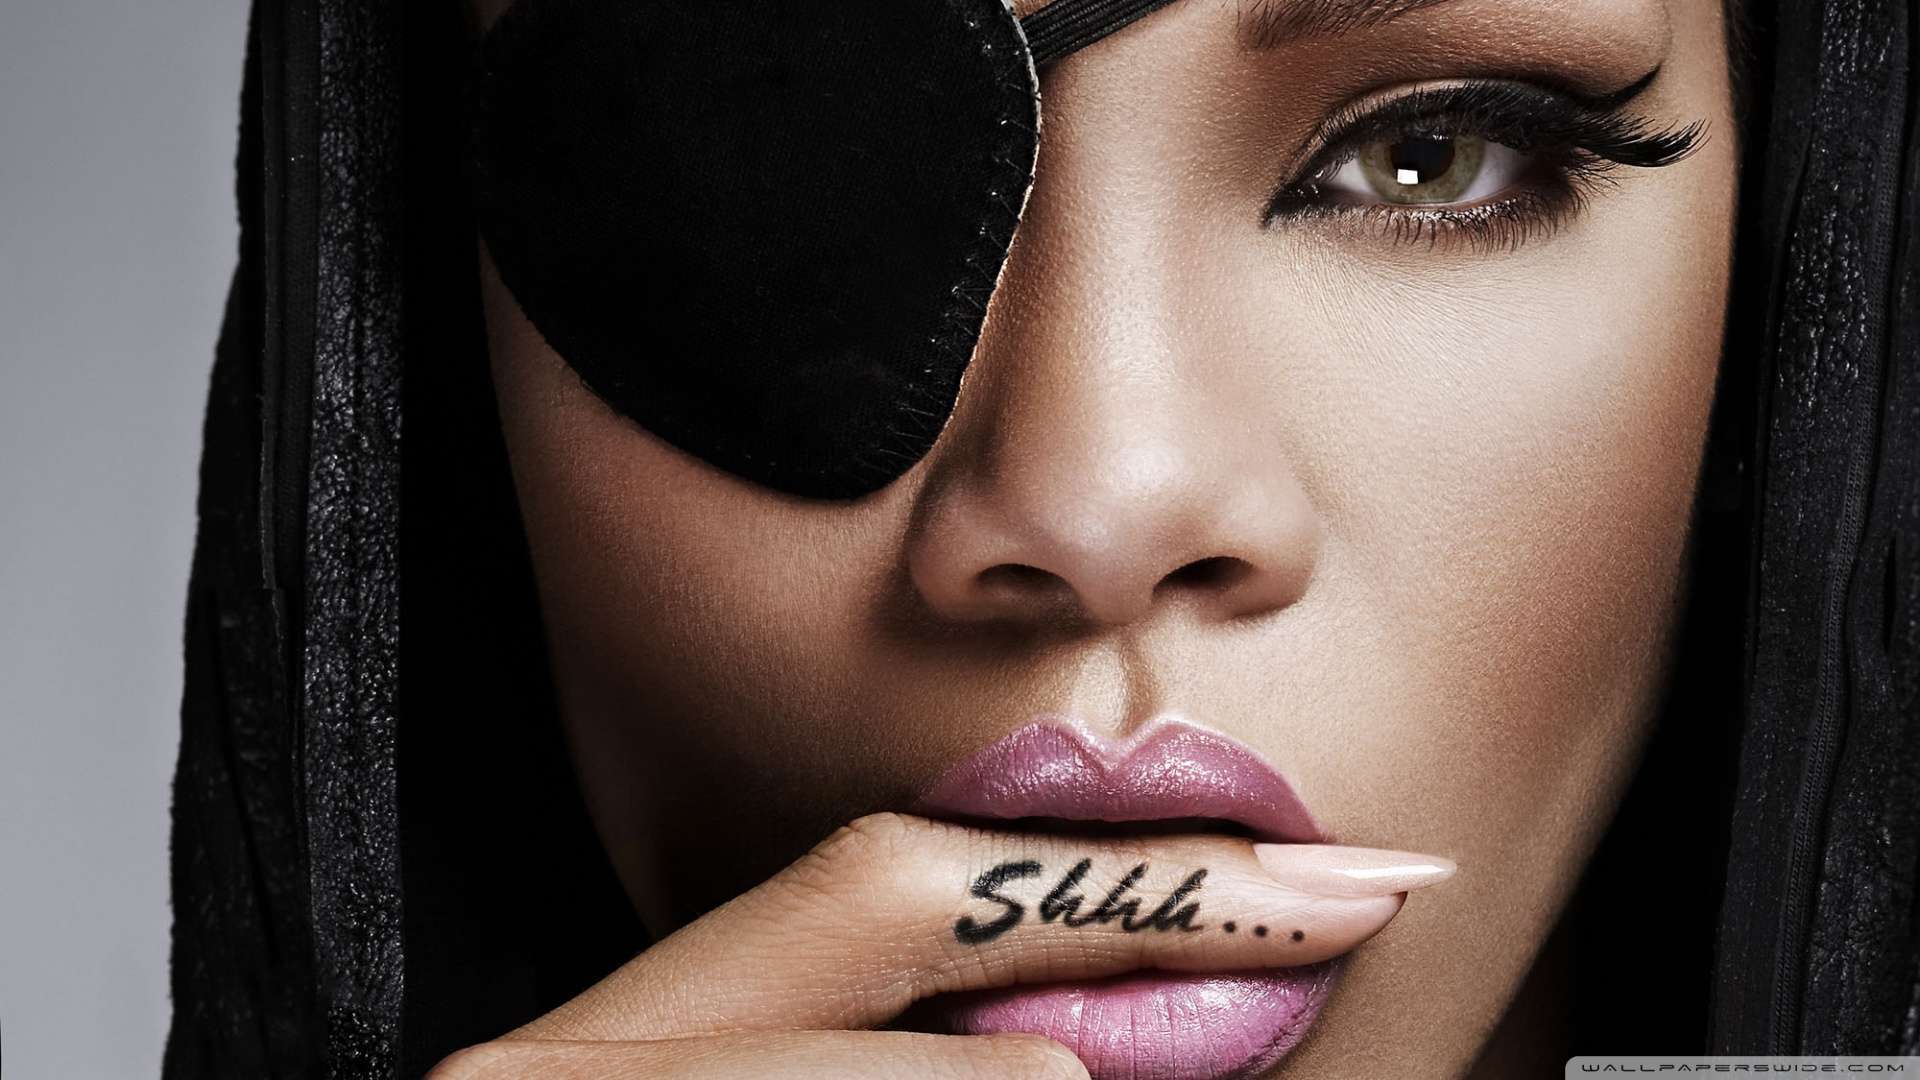 Wallpaper Pirate Rihanna 1080p HD Upload At February